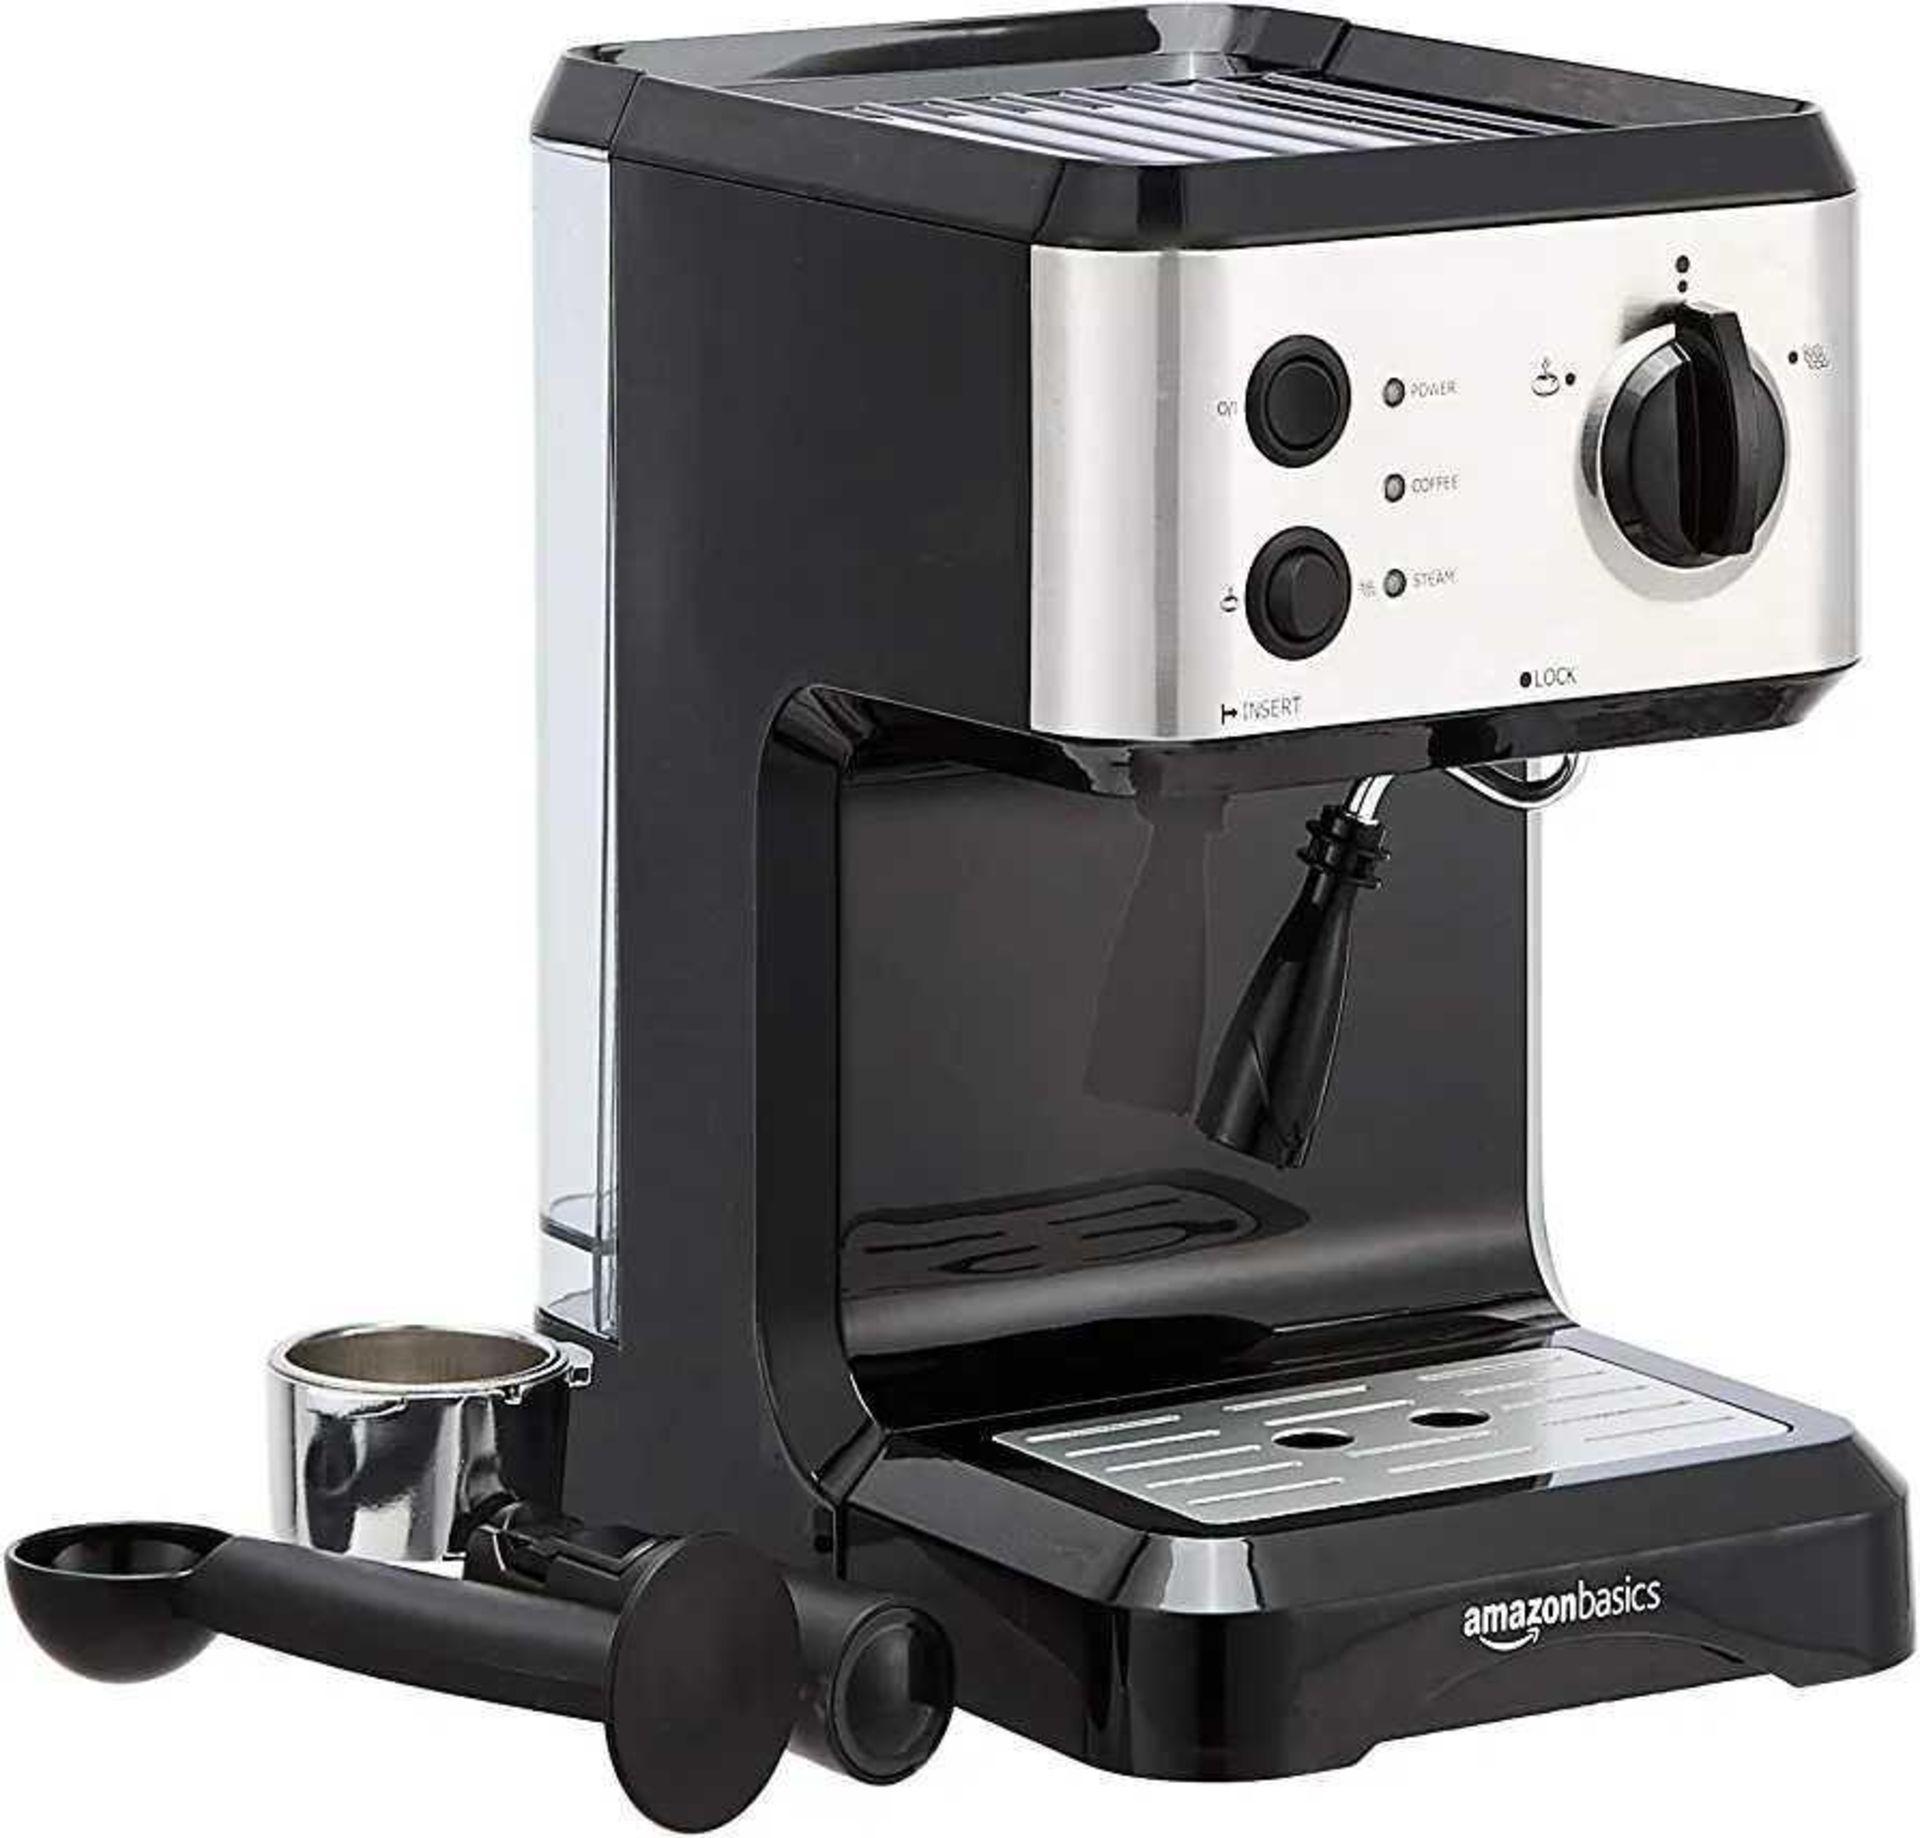 RRP £140 X2 Amazon Basics Espresso Coffee Machine